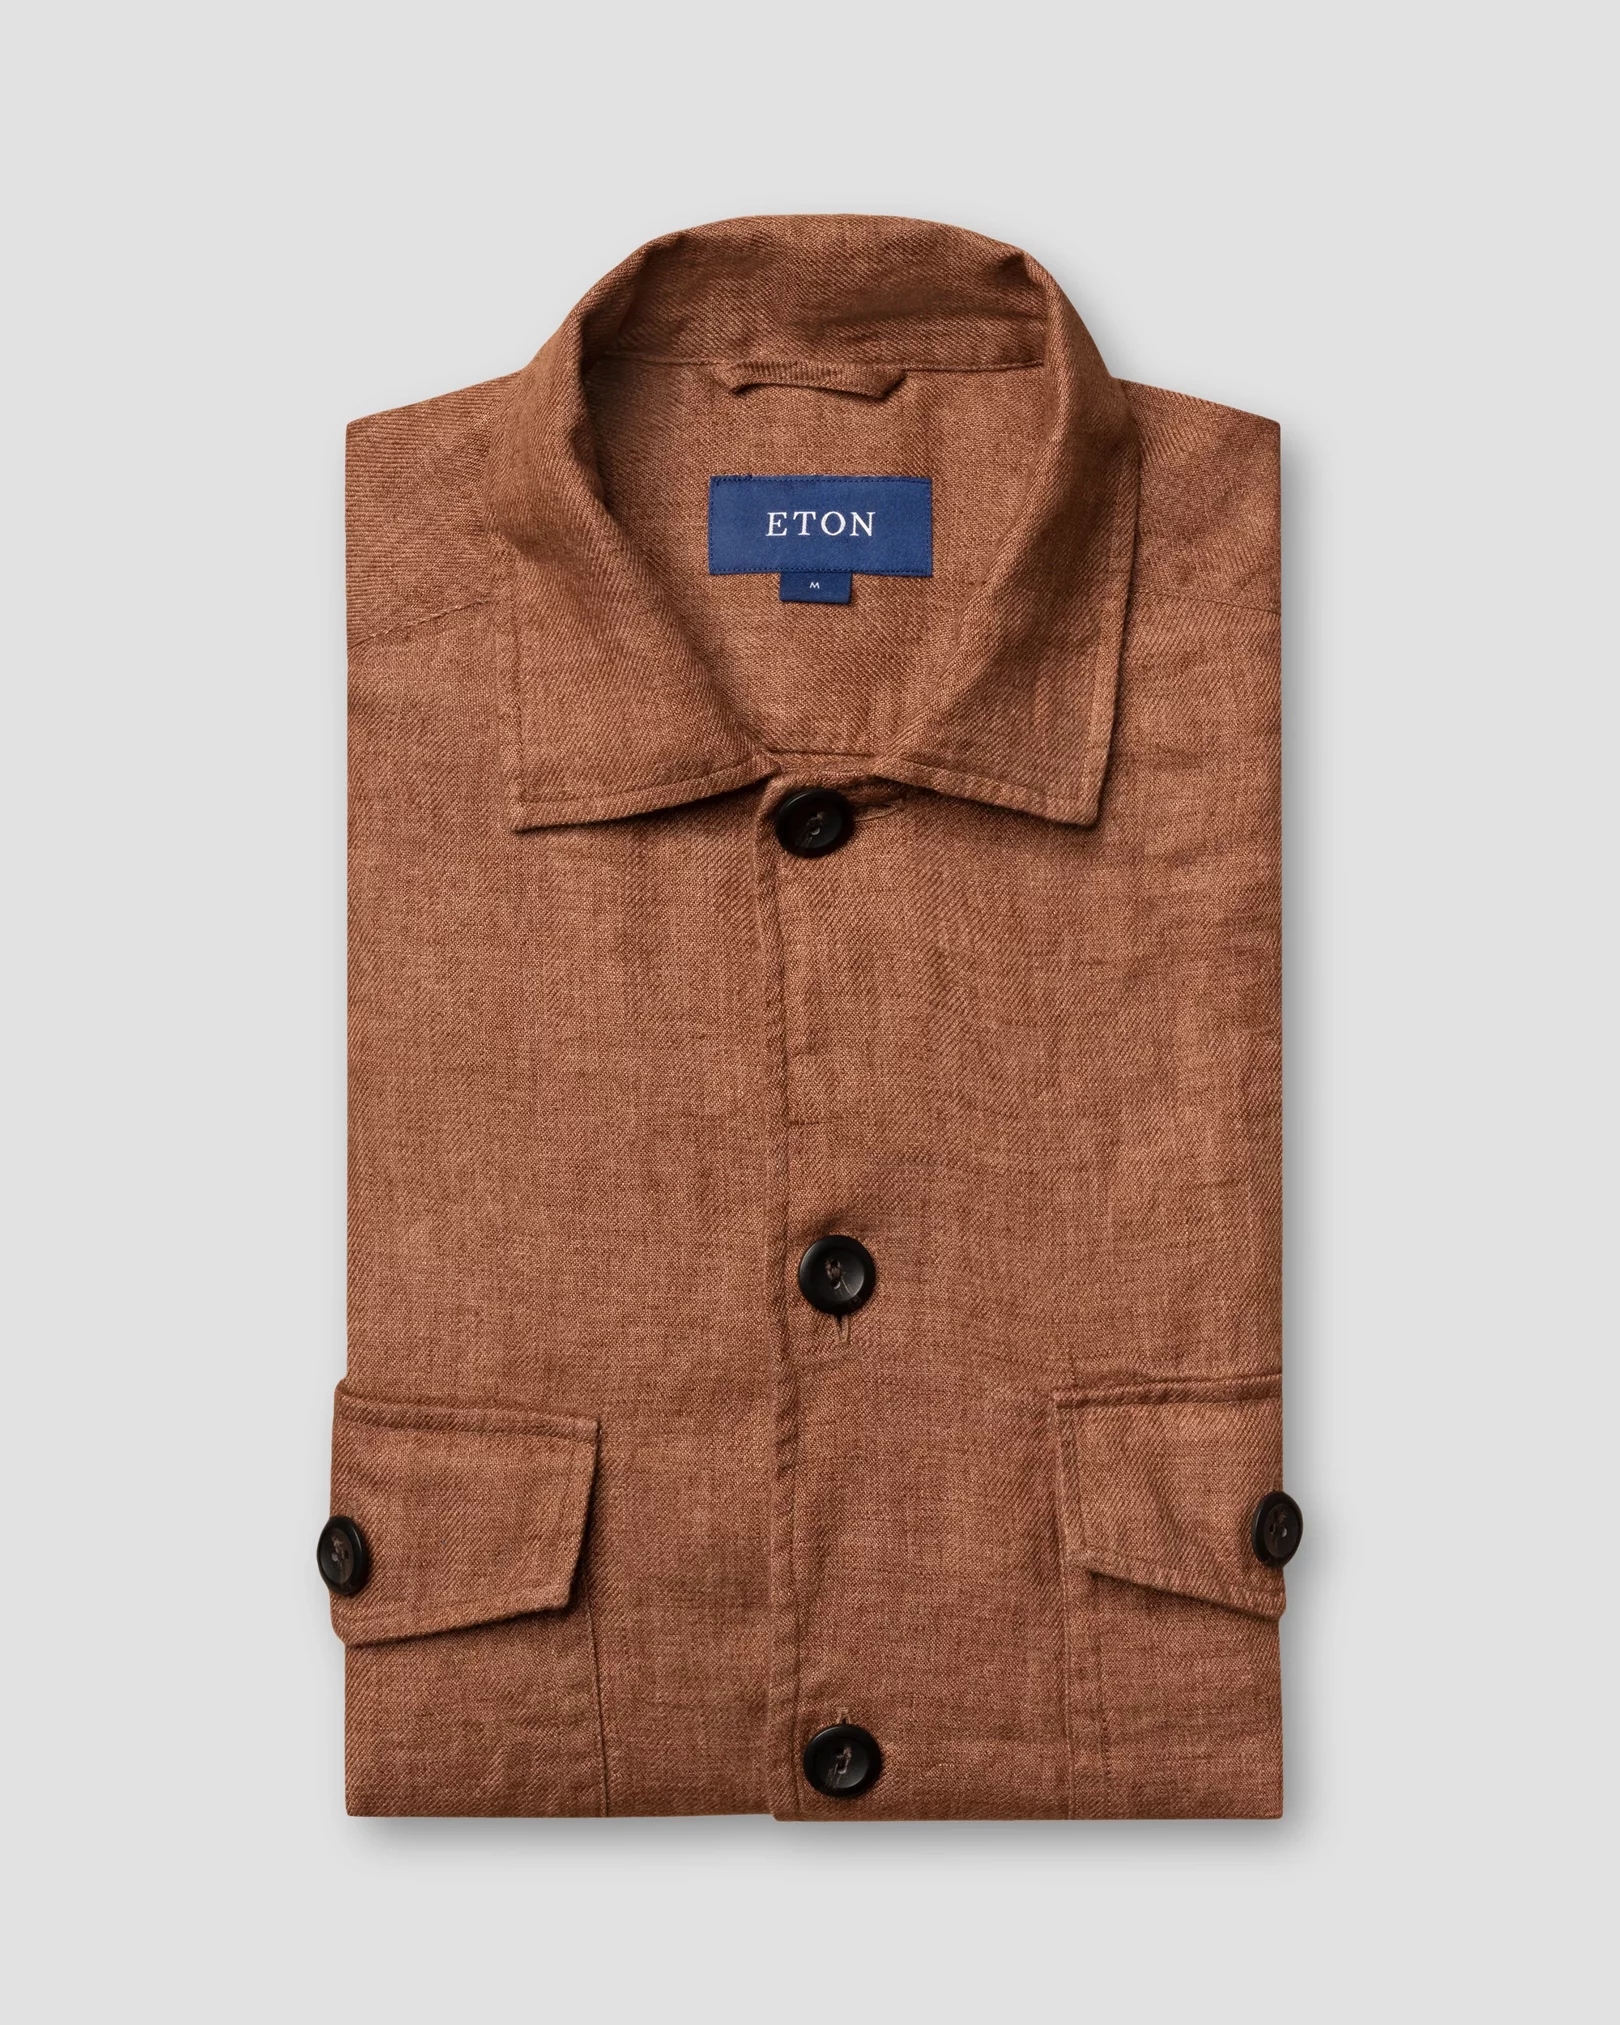 Eton - brown linen overshirt